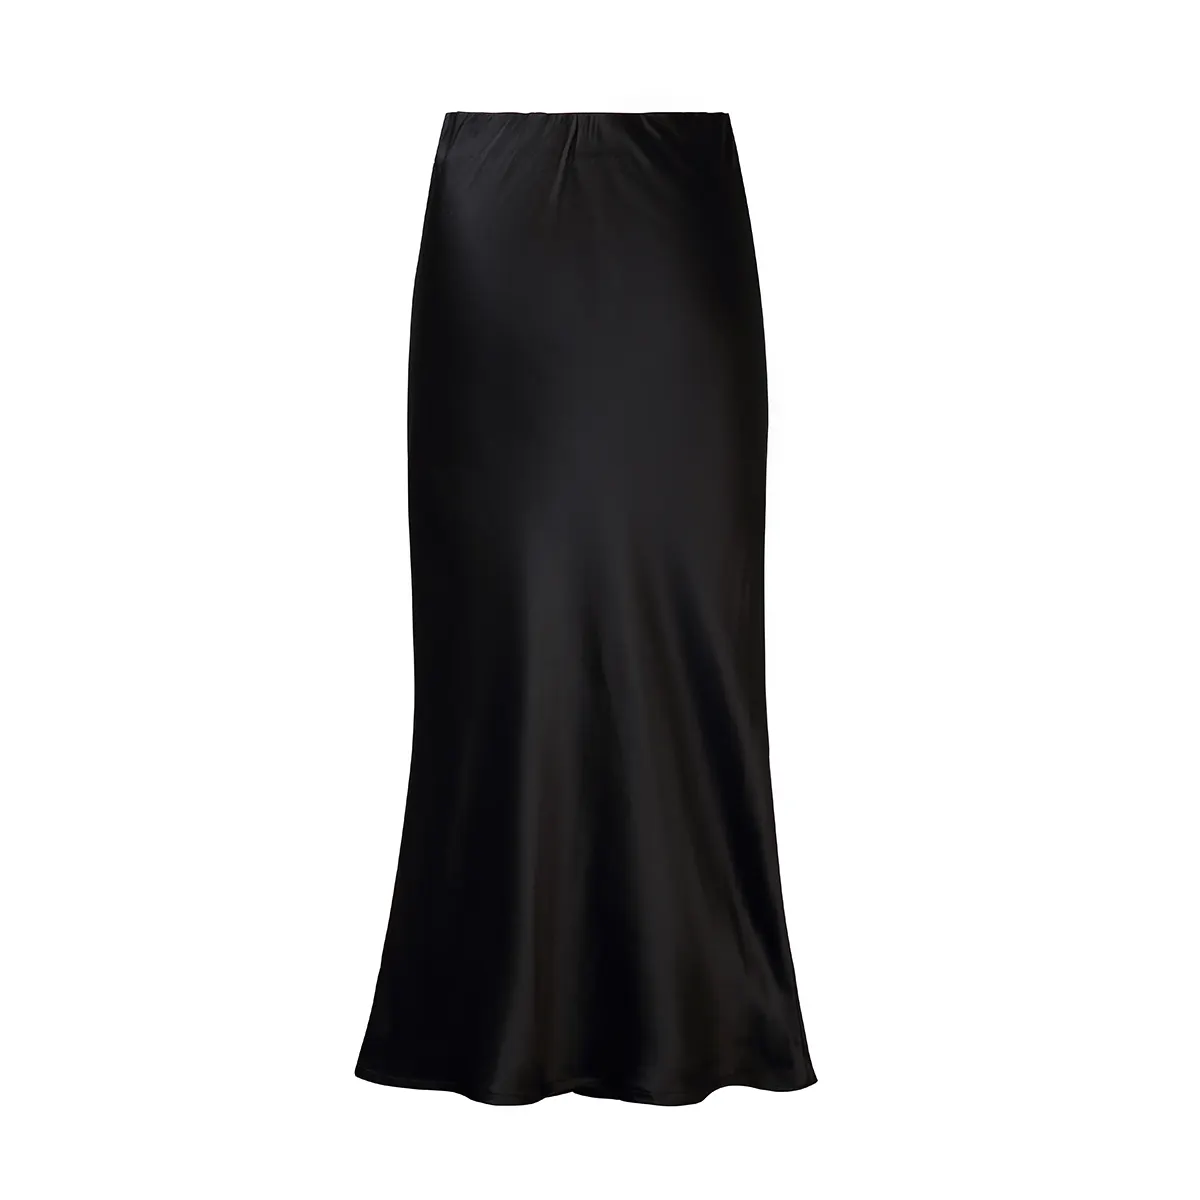 100% रेशम स्कर्ट महिला काले पेंसिल स्कर्ट रेशम साटन बुटीक निर्माताओं लोचदार कमरबंद लंबी स्कर्ट